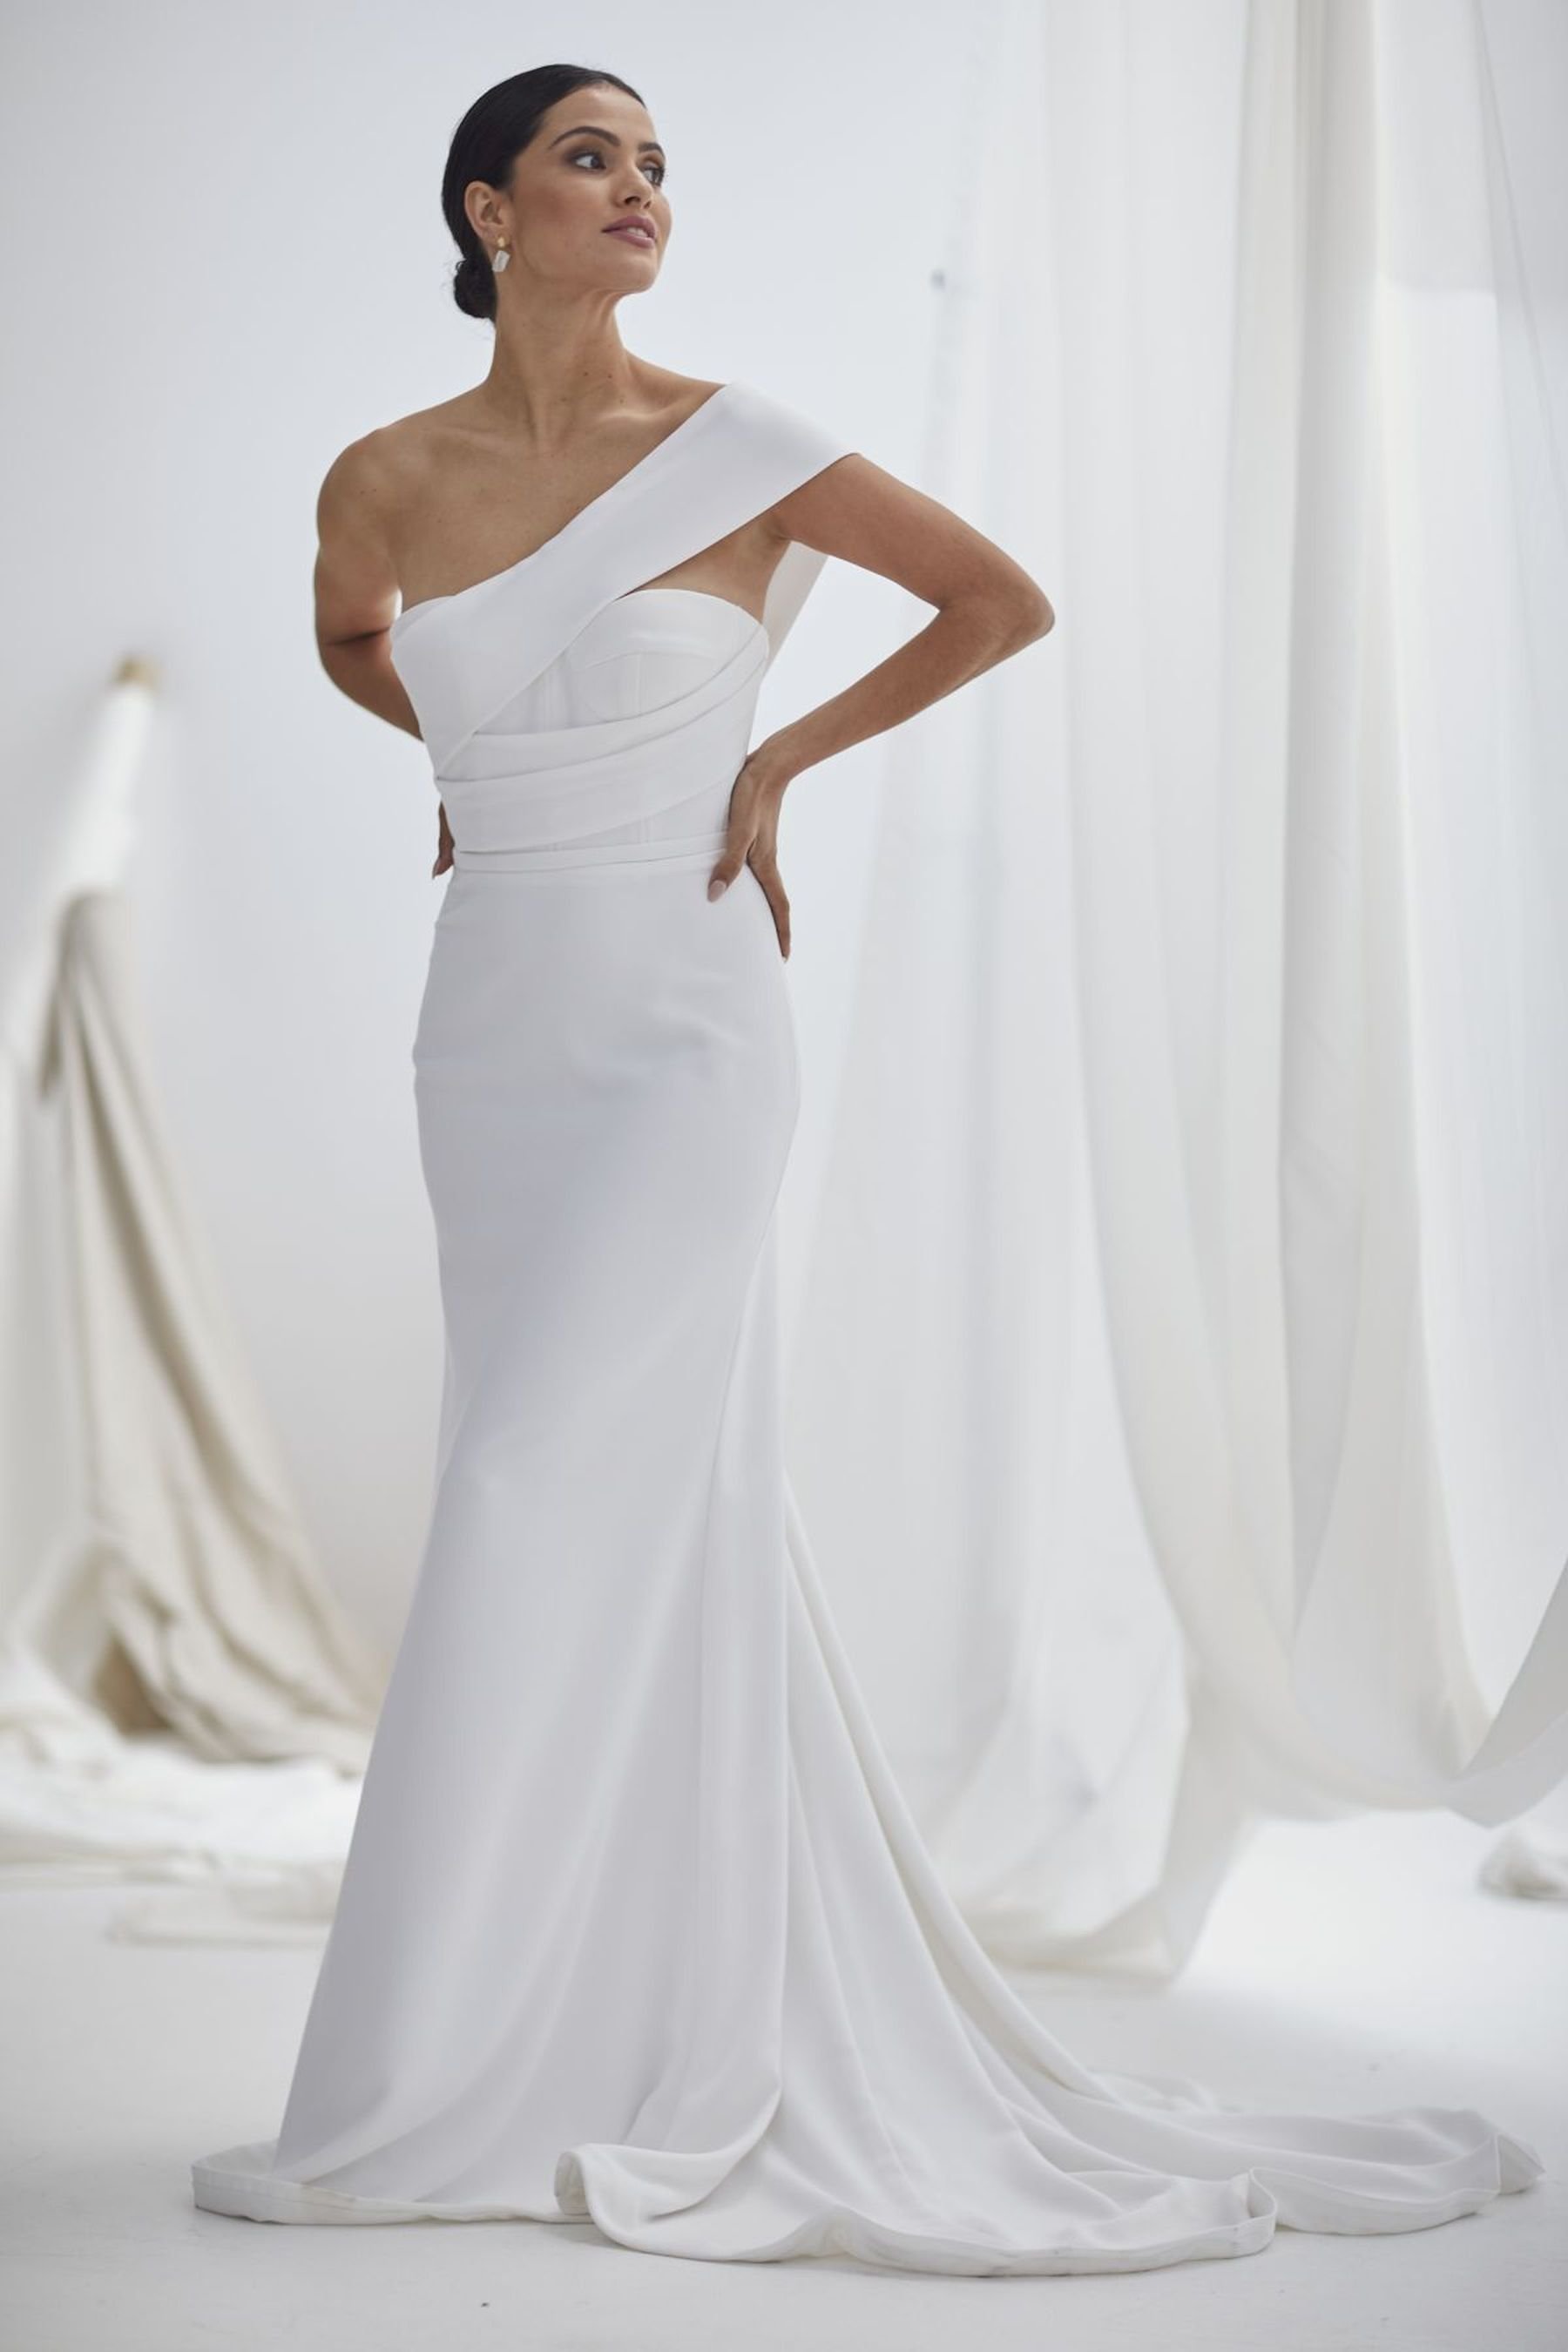 anton-wedding-gown-1-0050-1800pxjpg.jpg